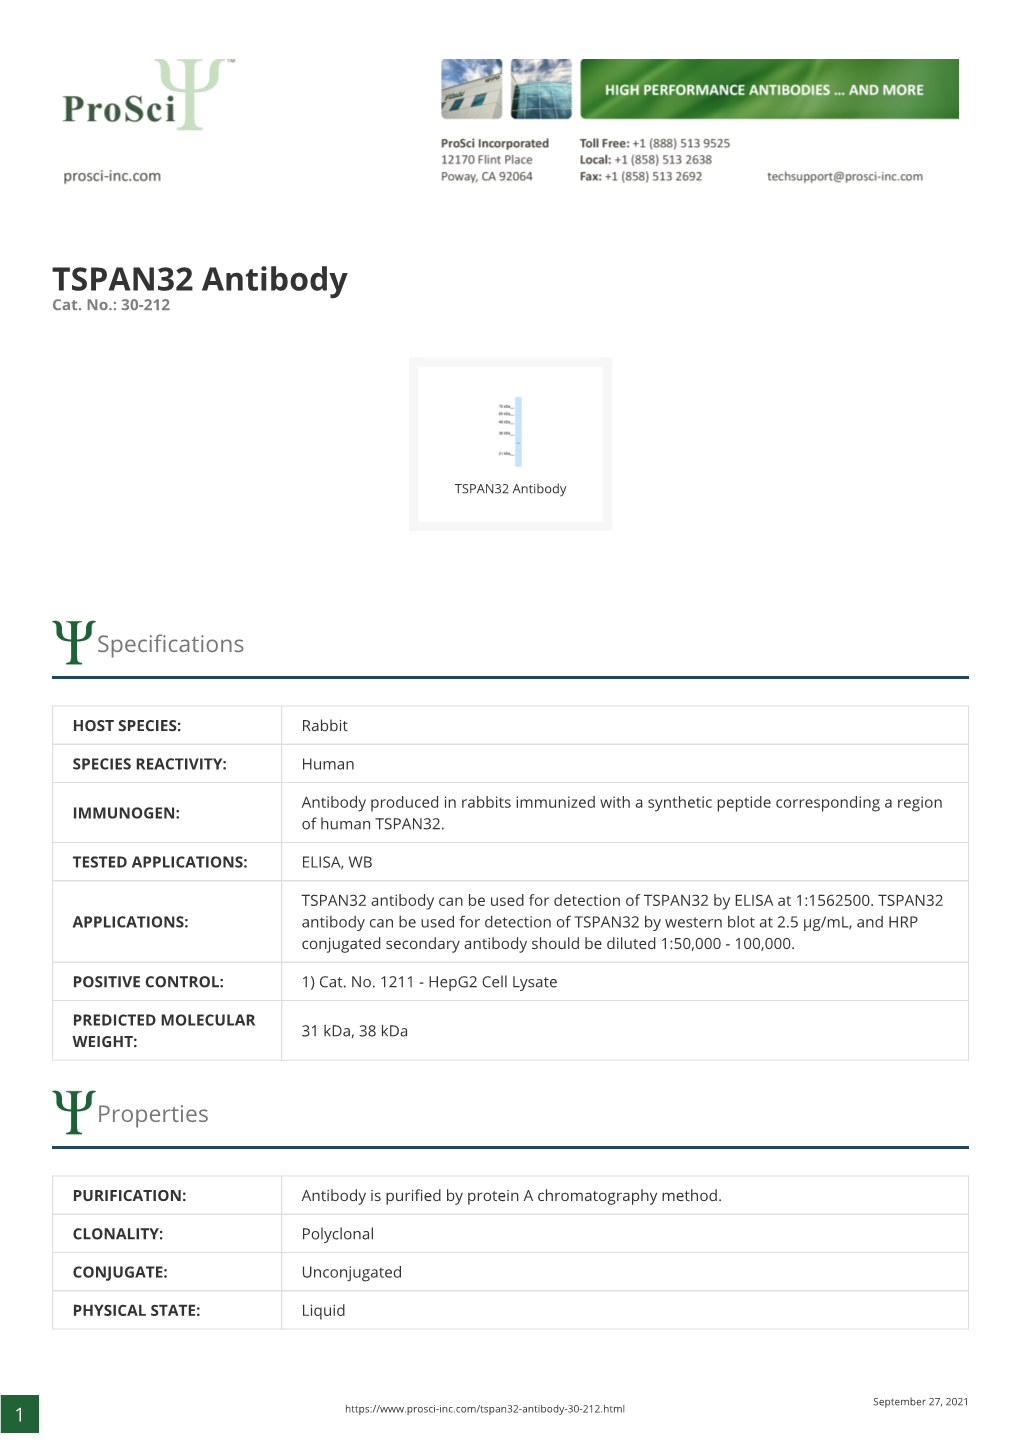 TSPAN32 Antibody Cat